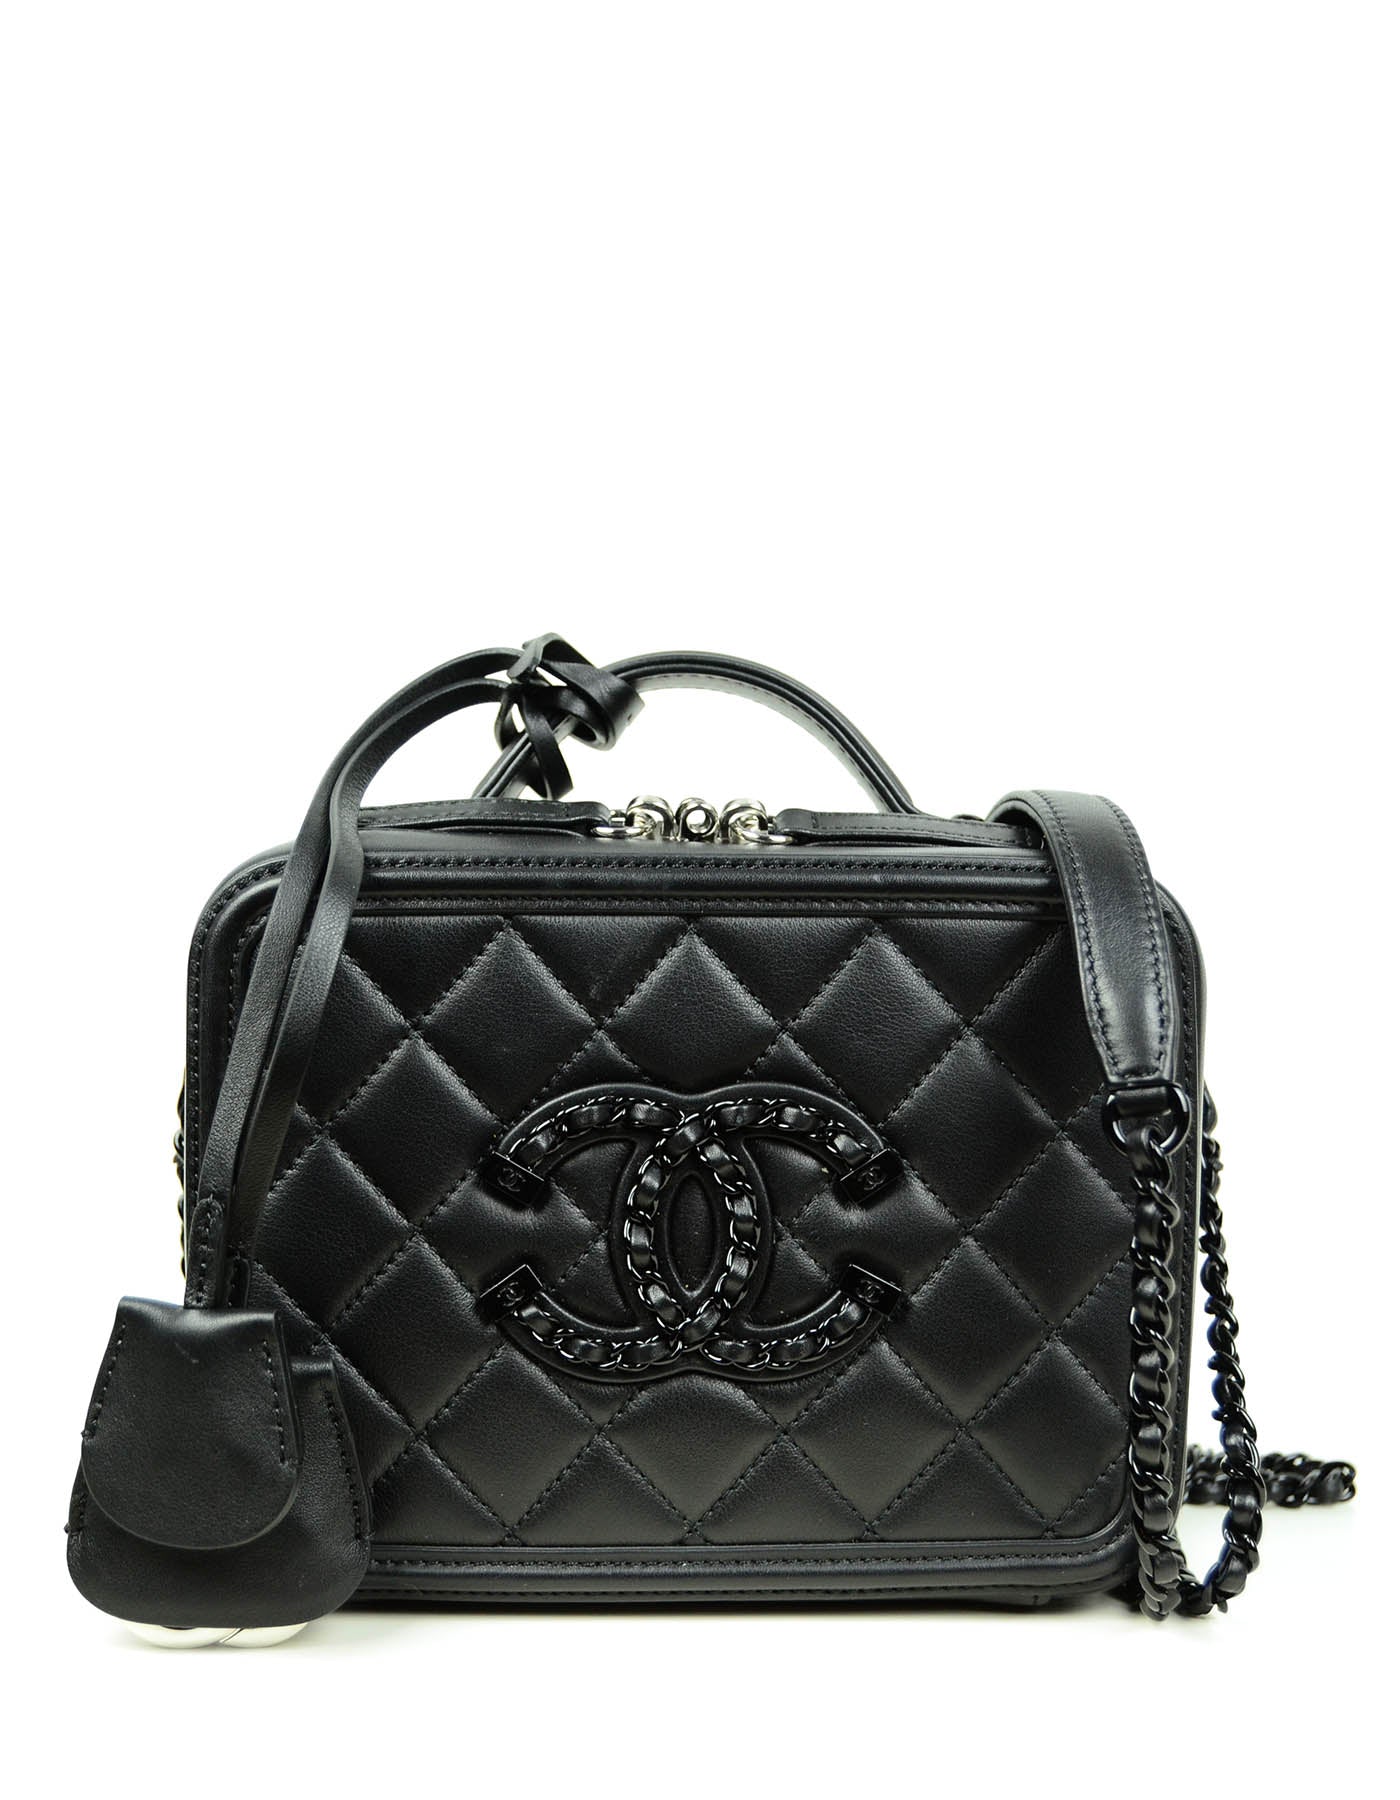 shops_unlimited - Chanel 20B so black Vanity case 1785